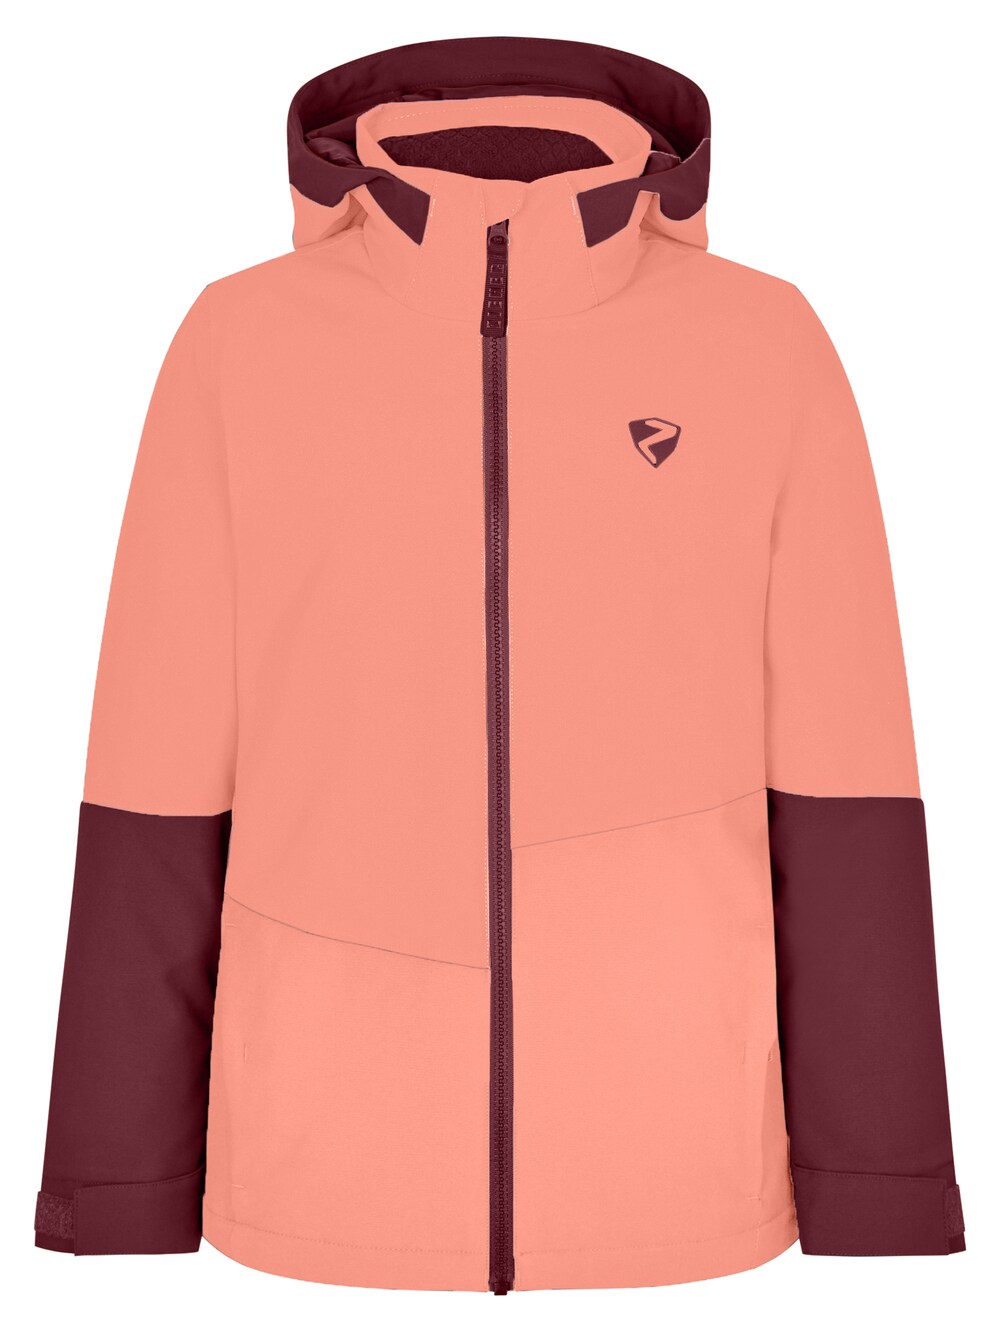 Спортивная куртка Ziener AVAK, абрикос спортивная куртка ziener avak фиолетовый